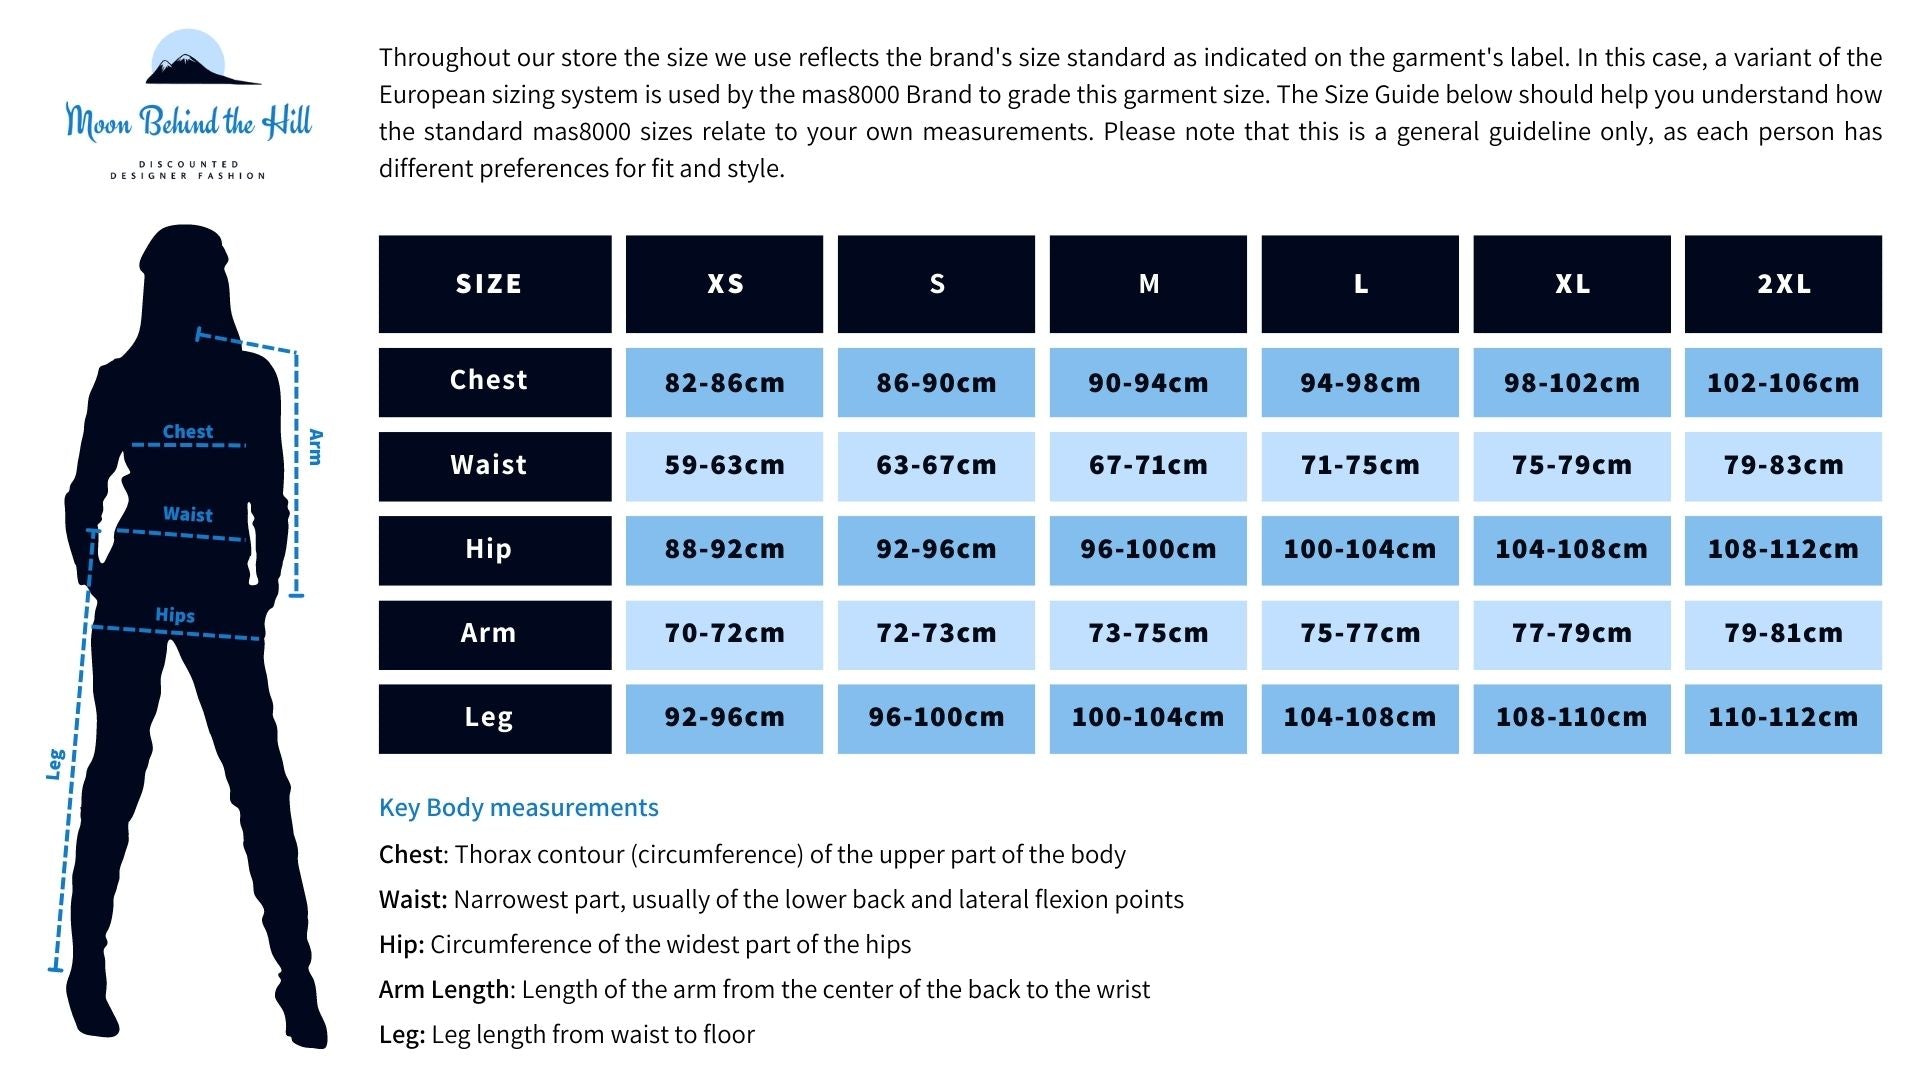 Standard mas8000 Women's Clothing Sizes Body Measurements Guide